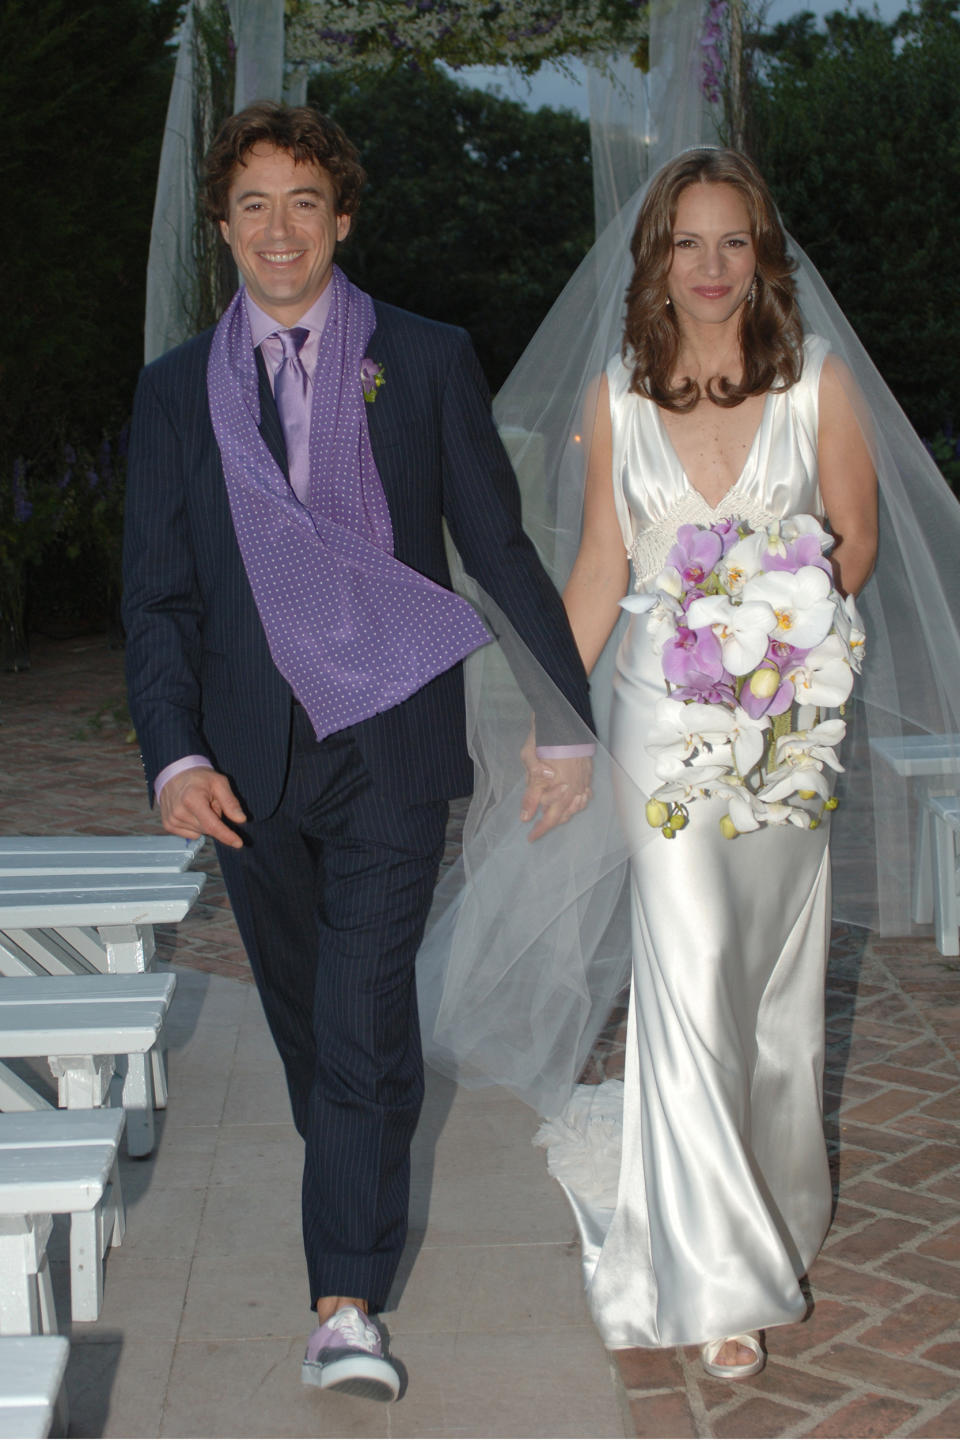 Robert Downey Jr. and Susan Levin Wedding - Handout Photo (WireImage House / WireImage)